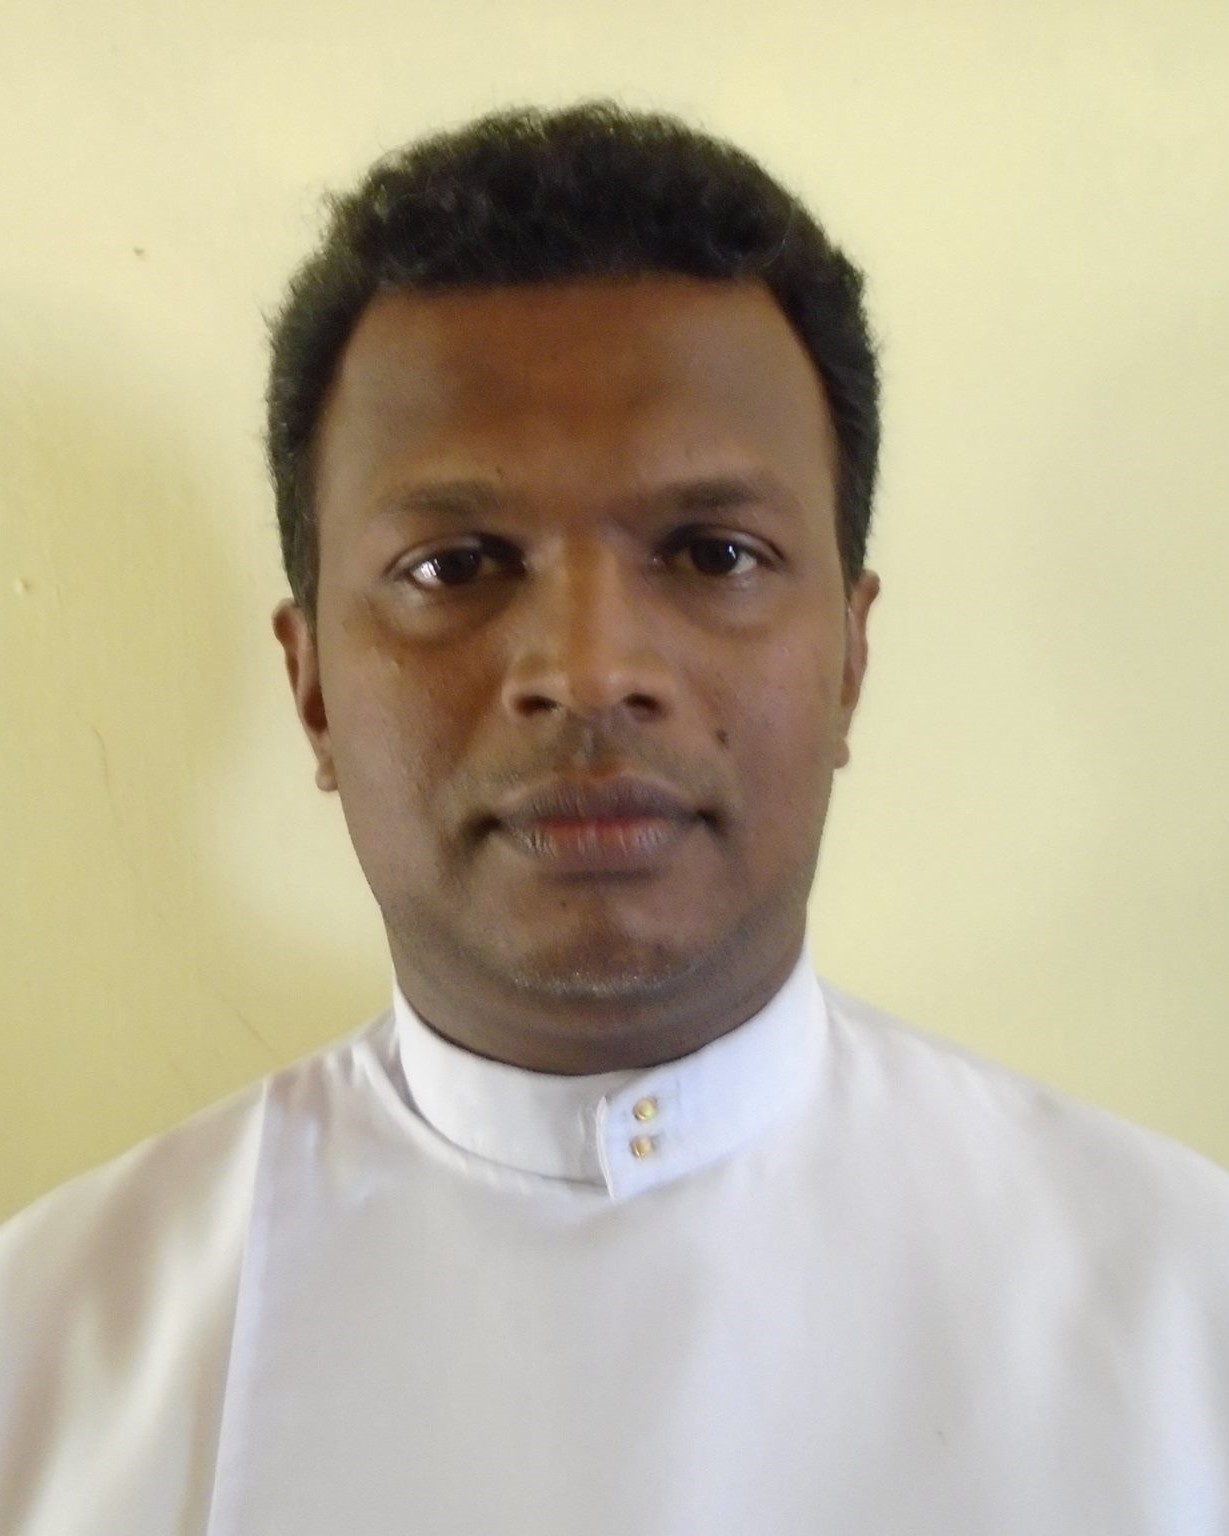 Rev. Akuranage Nuwan Mahesh Seneviratne is a Presbyter at Church of Ceylon - Diocese of Kurunagala